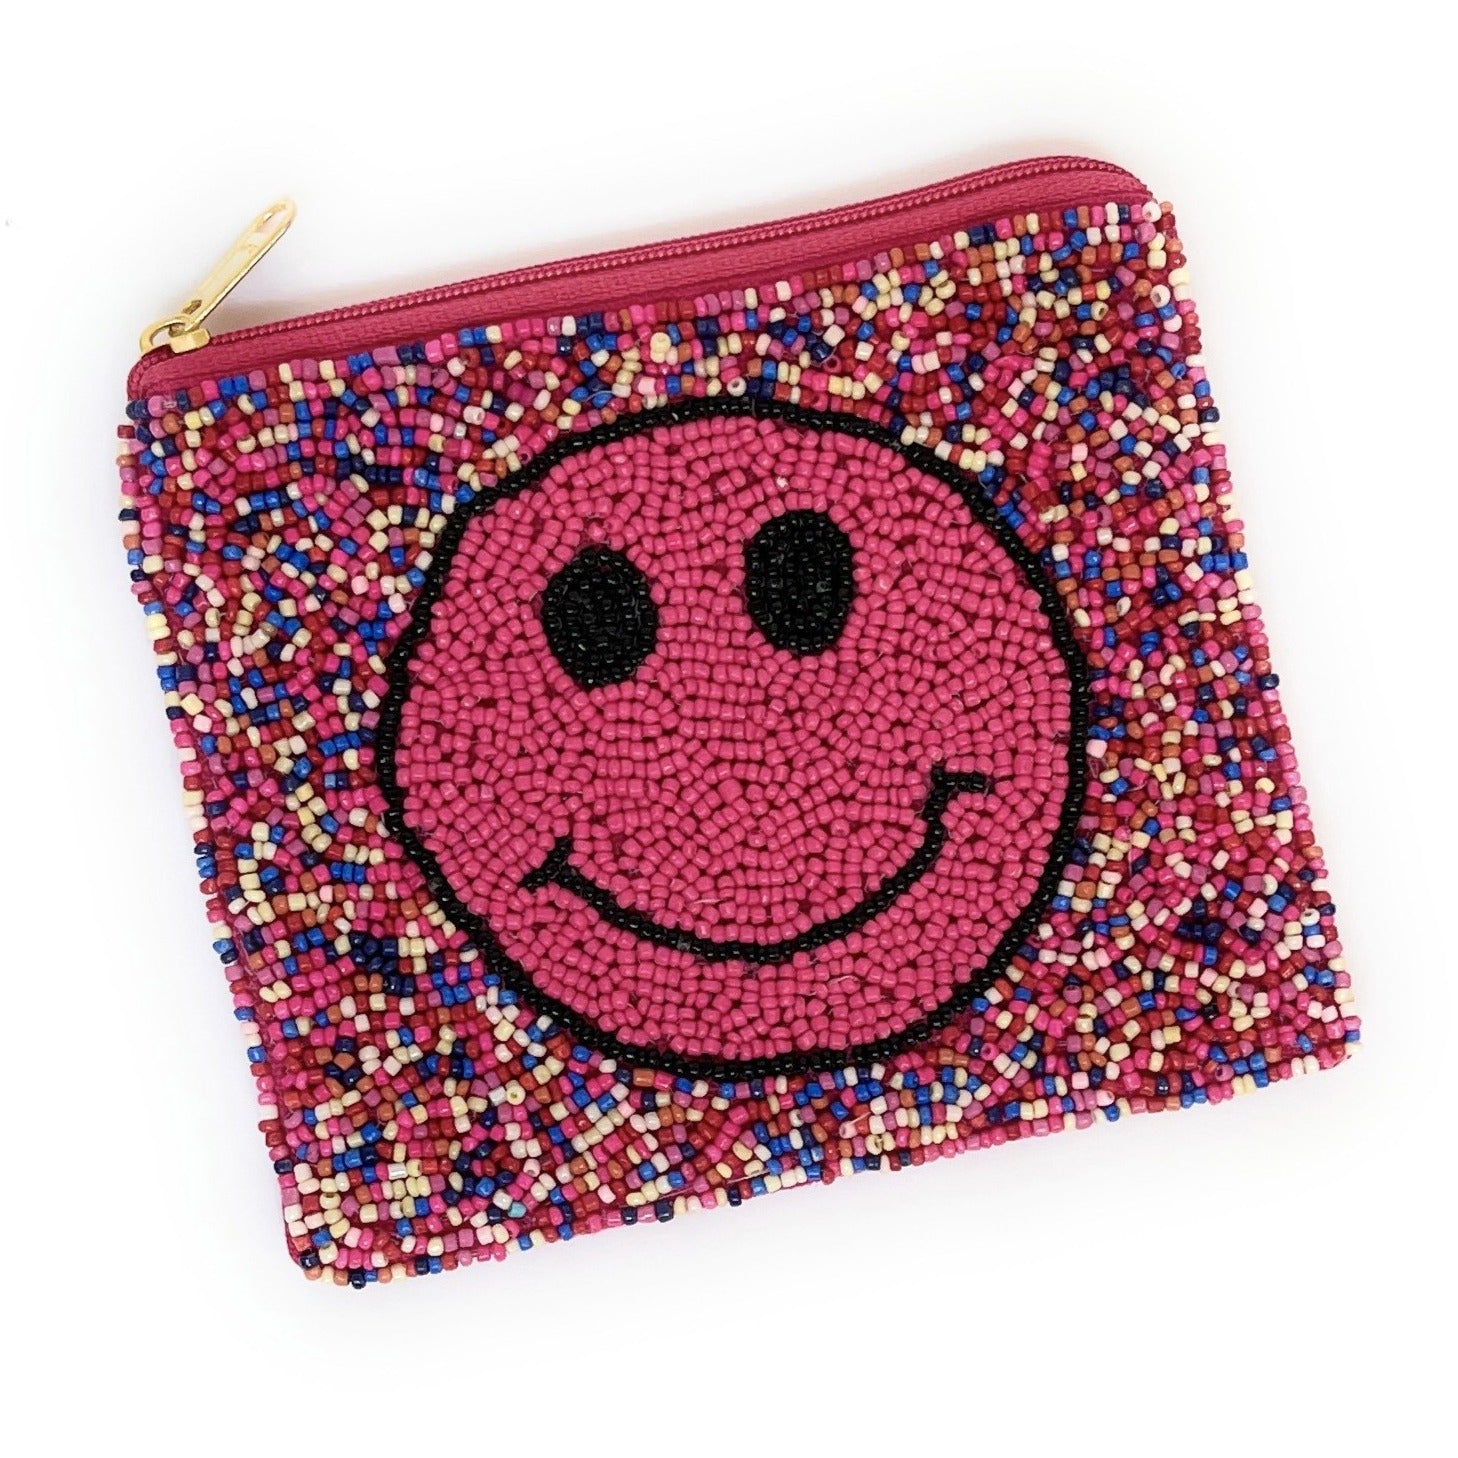 Elena Handbags Twine Woven Smiley Face Bag | Bags, Shoulder purse, Woven